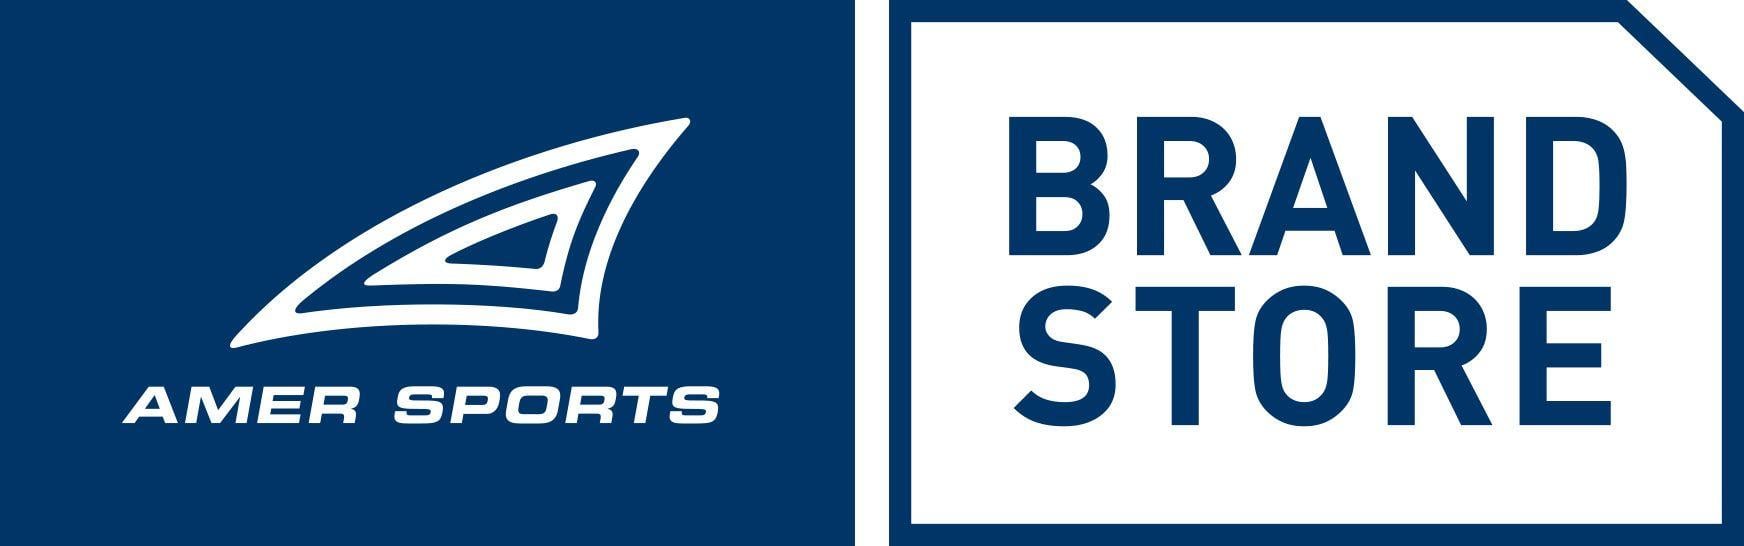 Store Brand Logo - Amer Sports Brand Store | Amer Sports